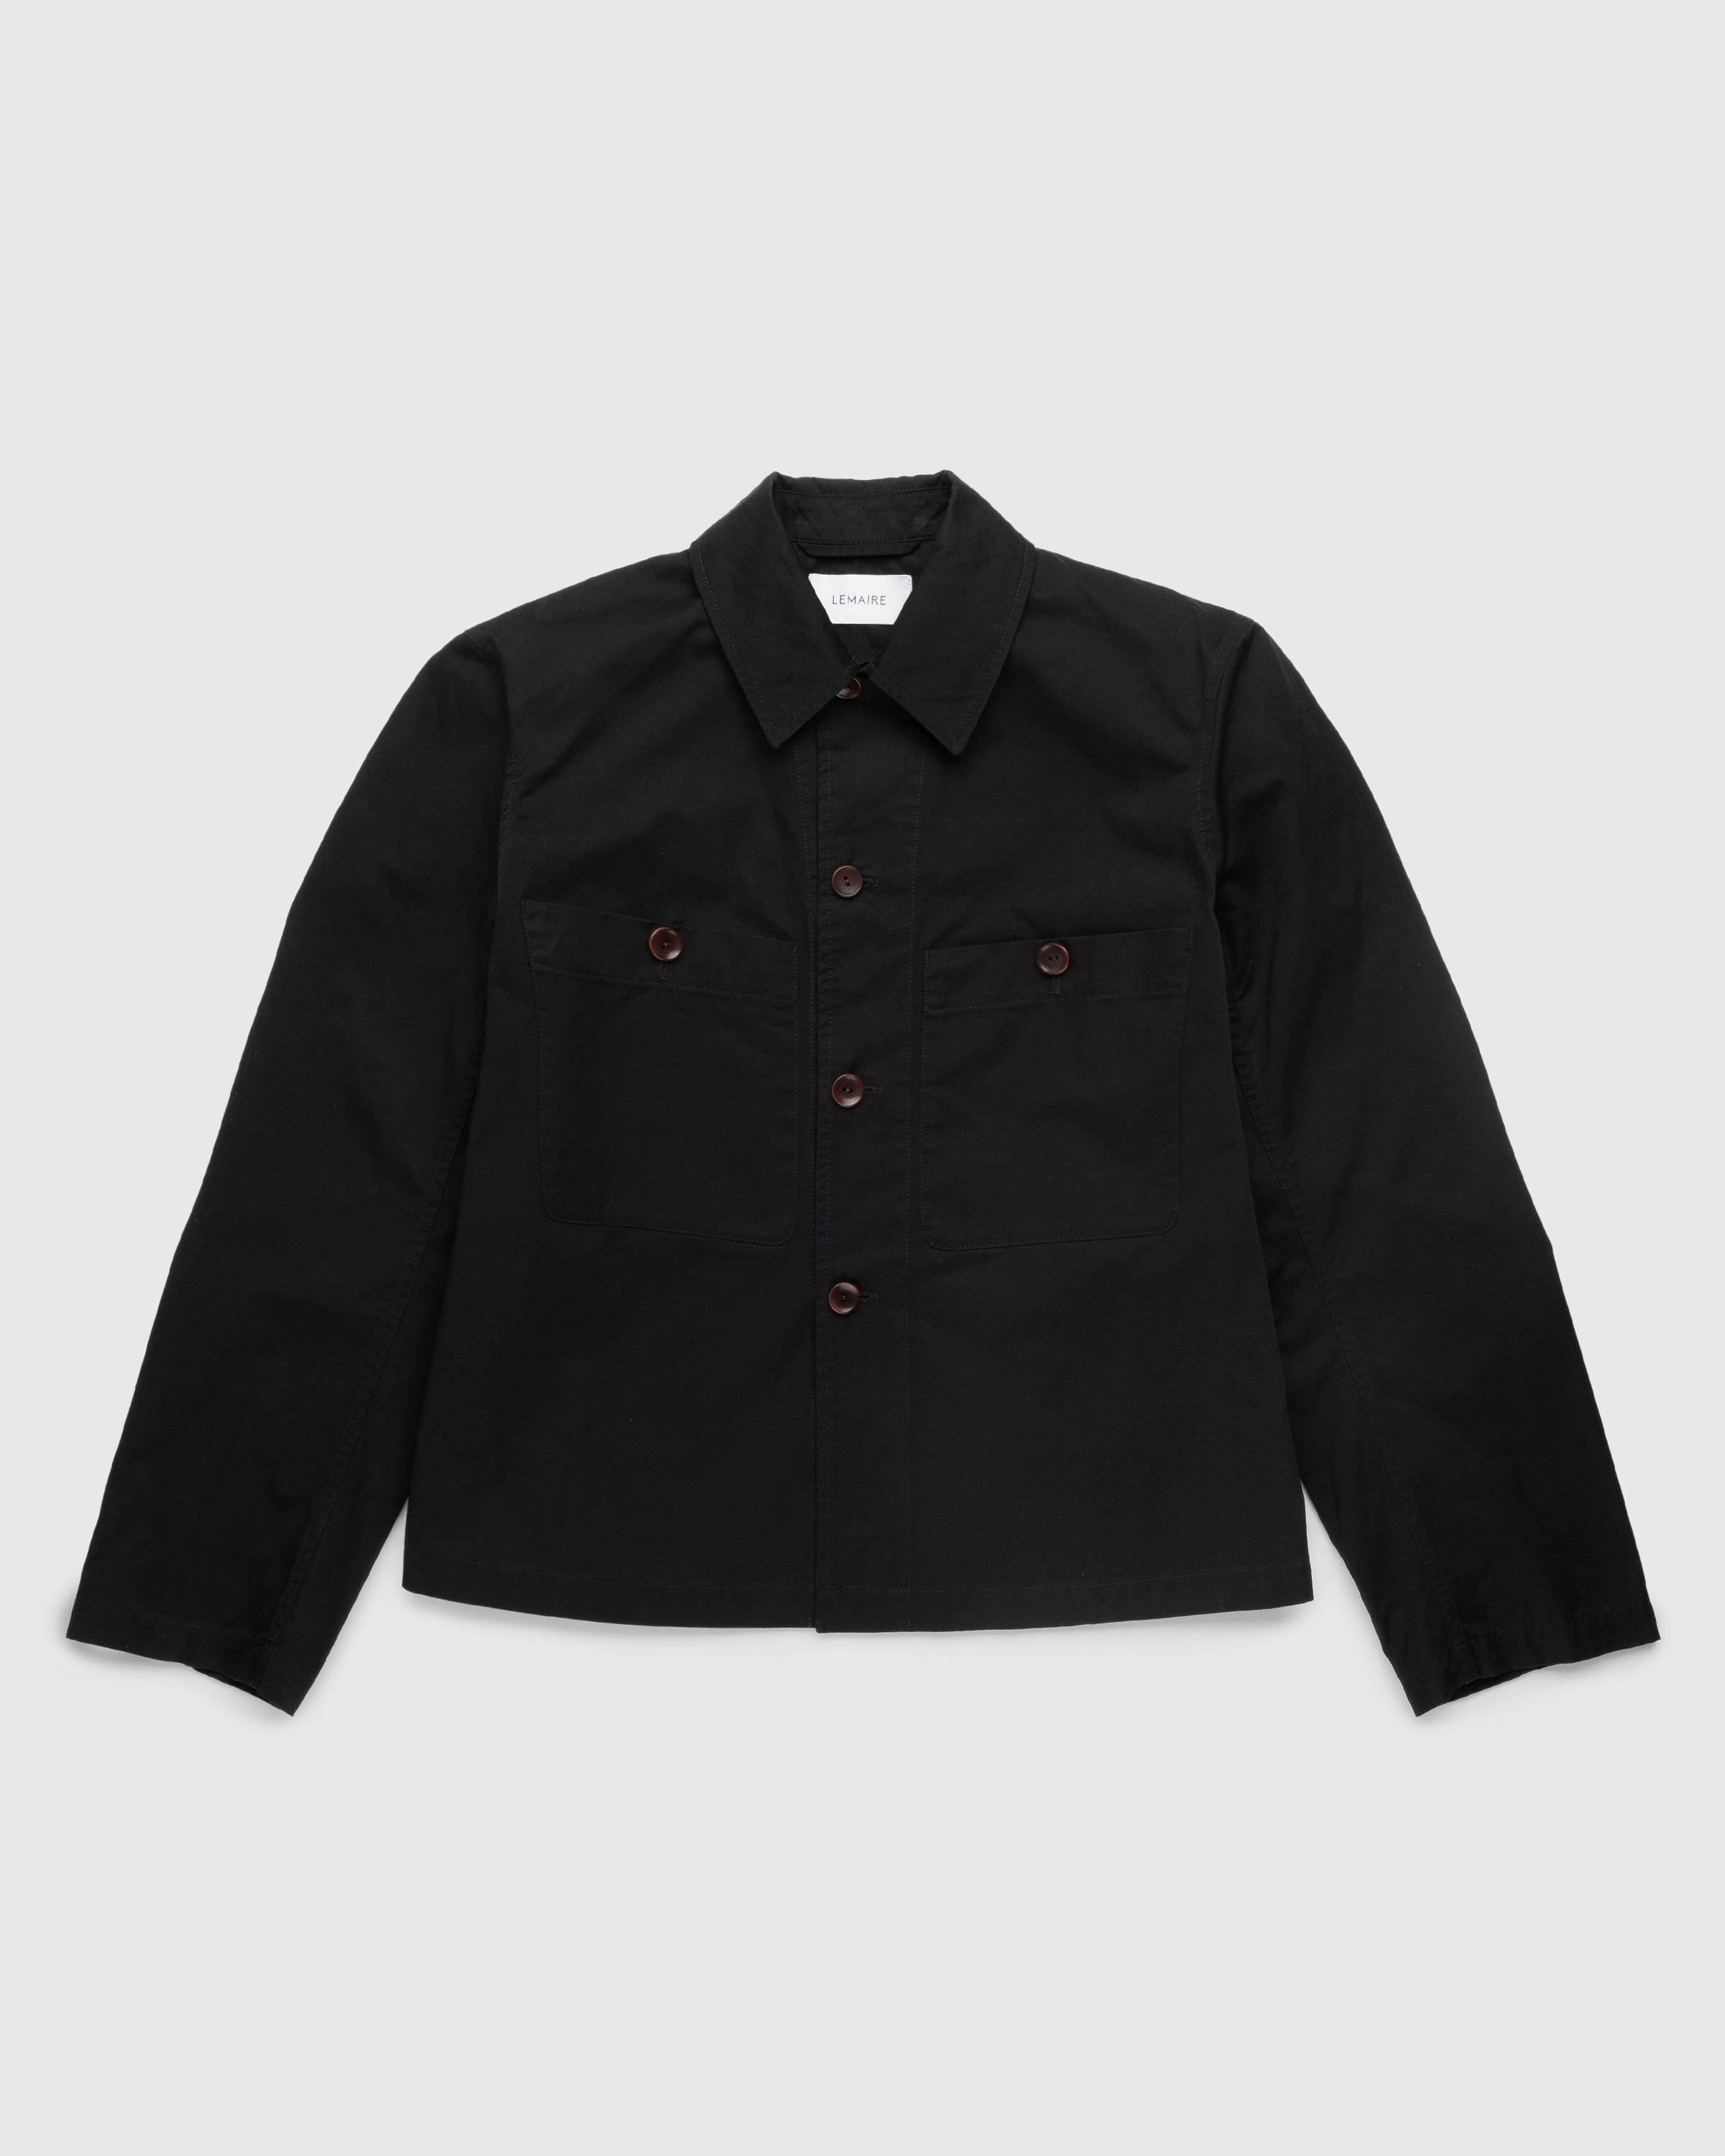 Lemaire – Military Overshirt Black | Highsnobiety Shop